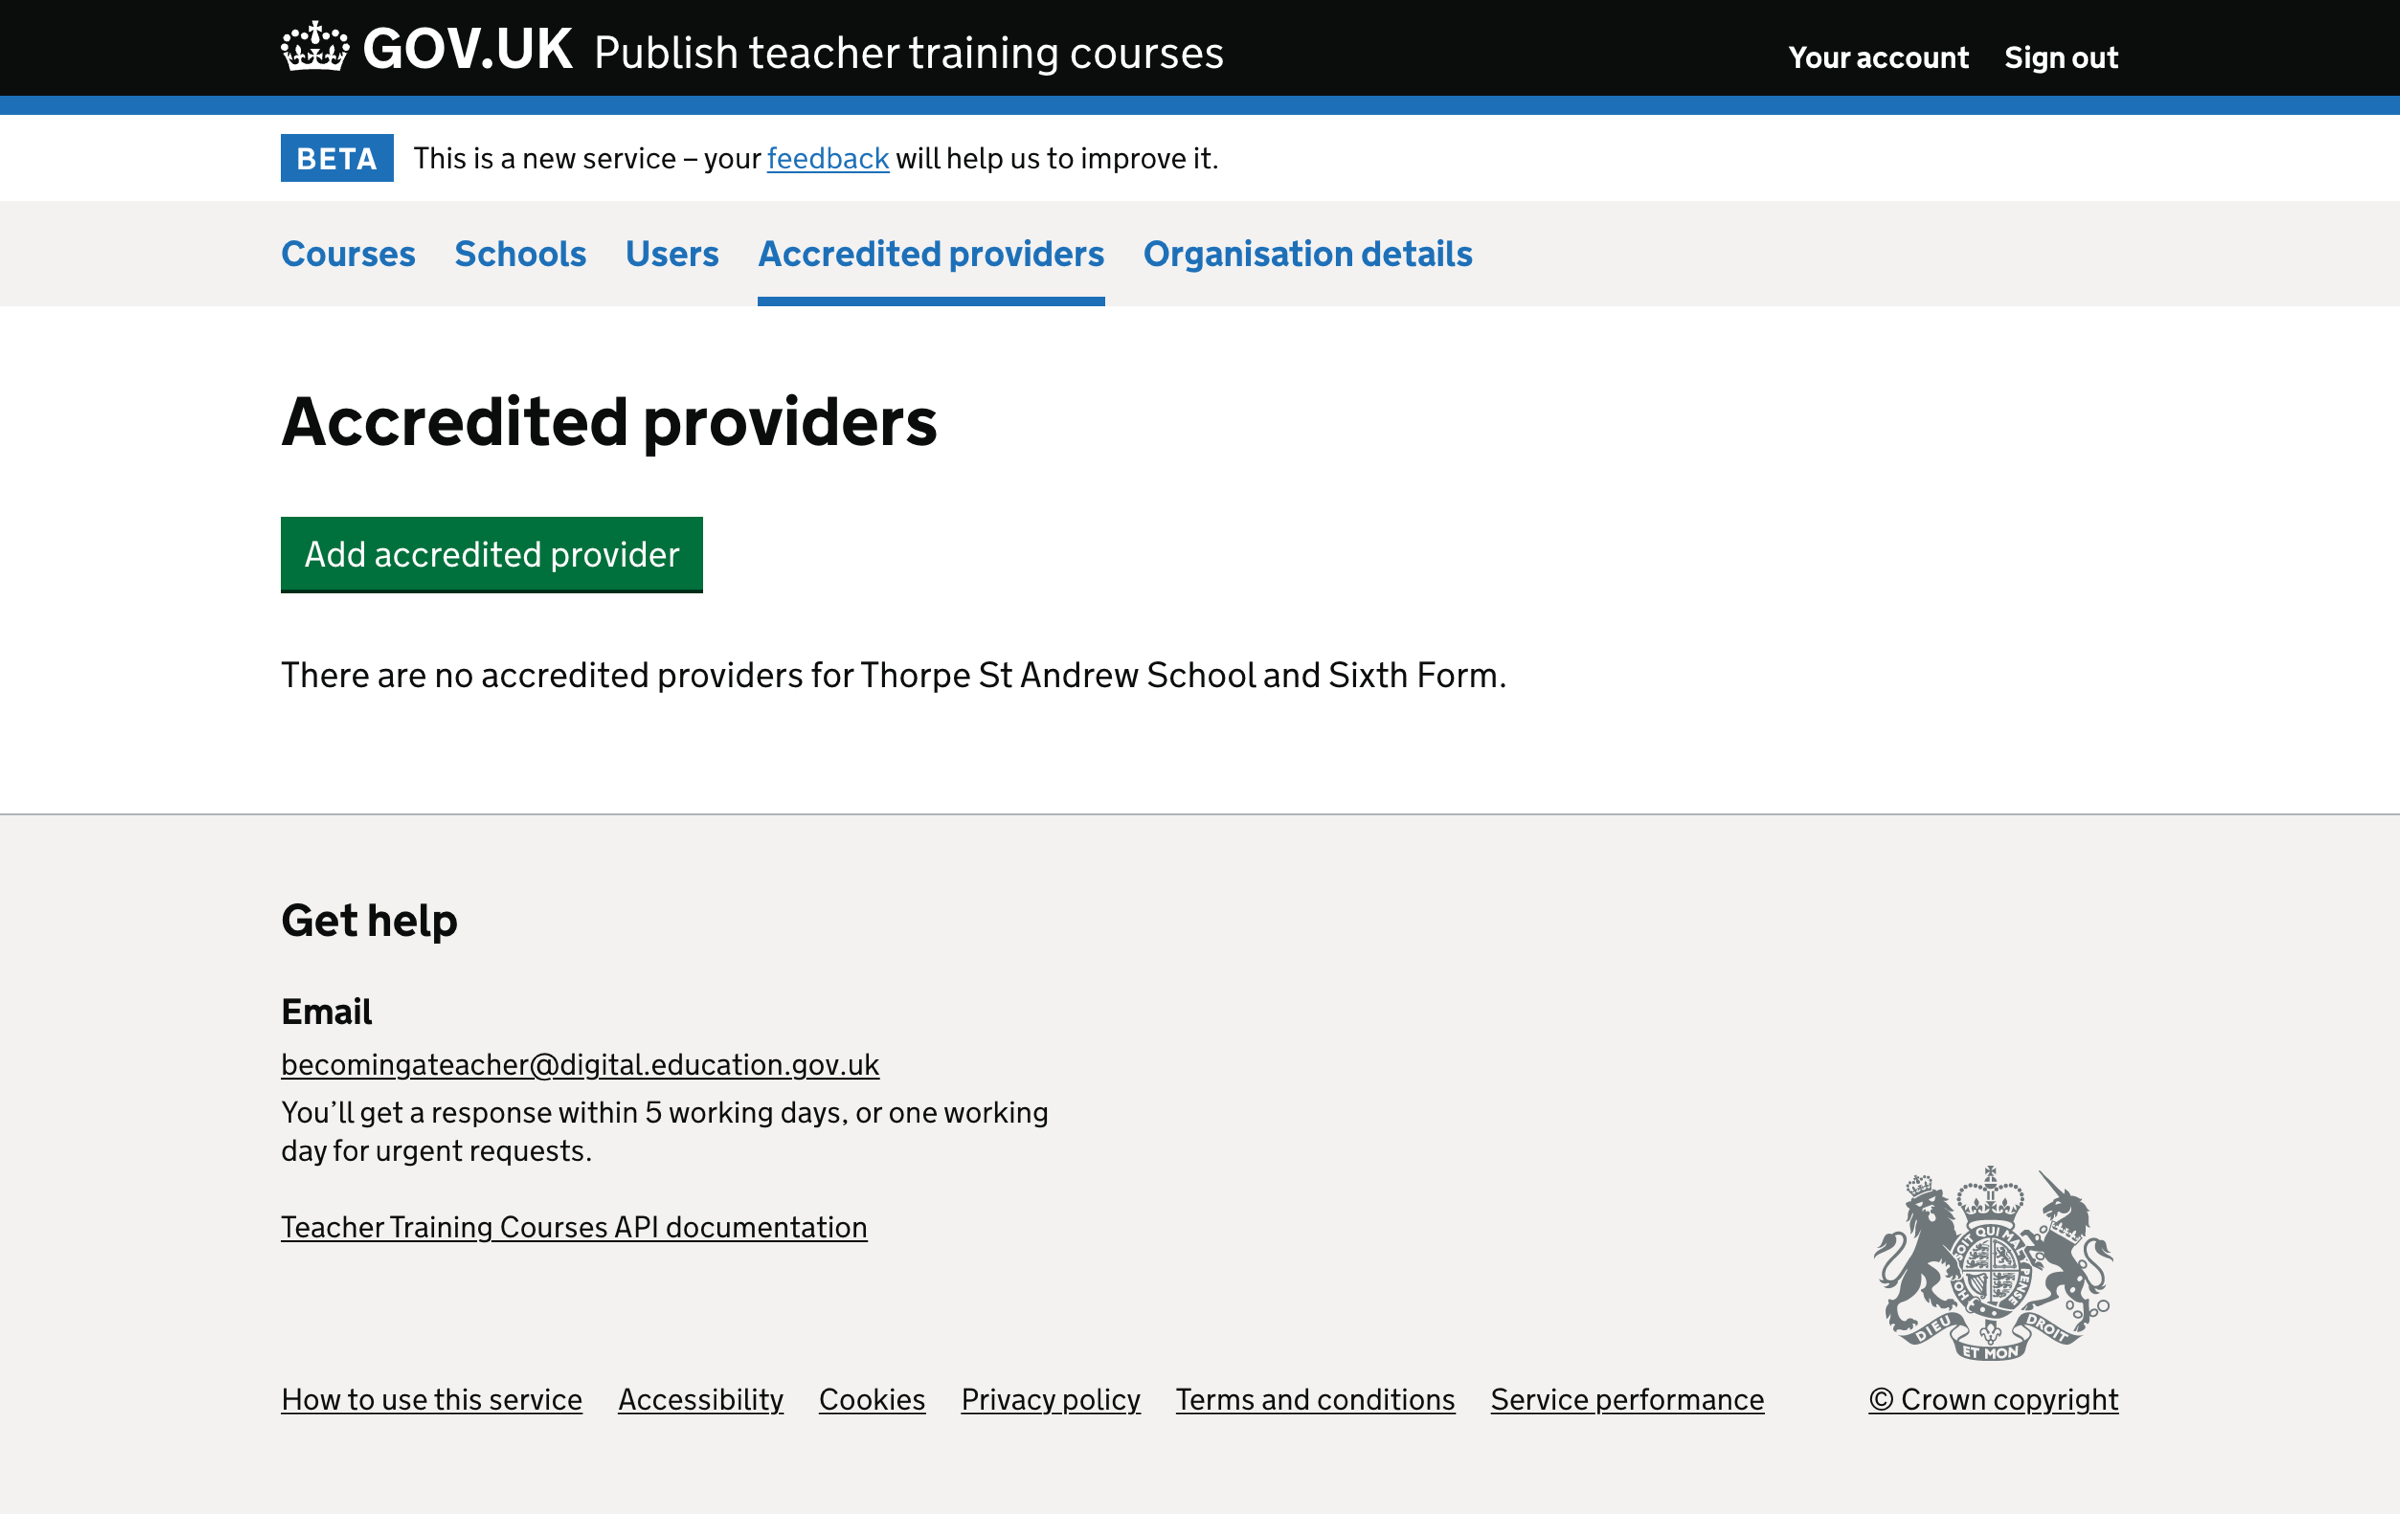 Screenshot of Accredited provider list - empty